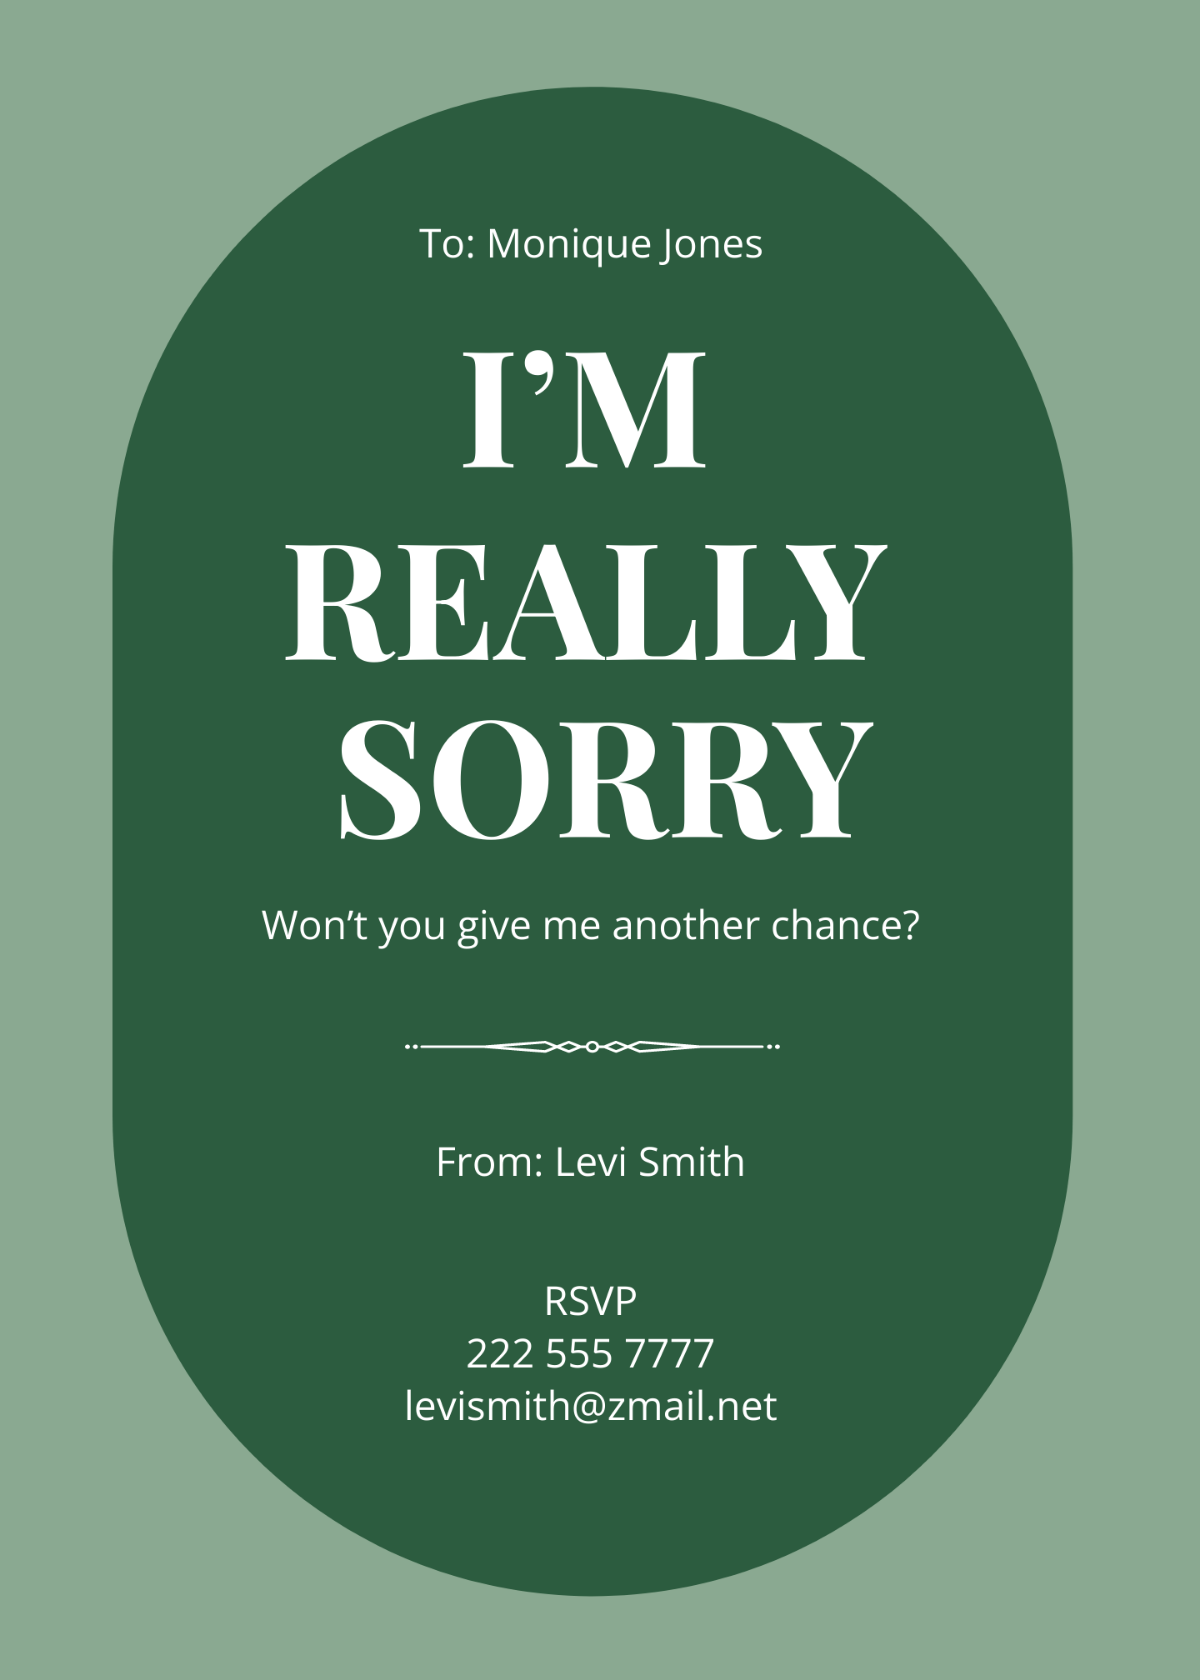 Printable Apology Card Template